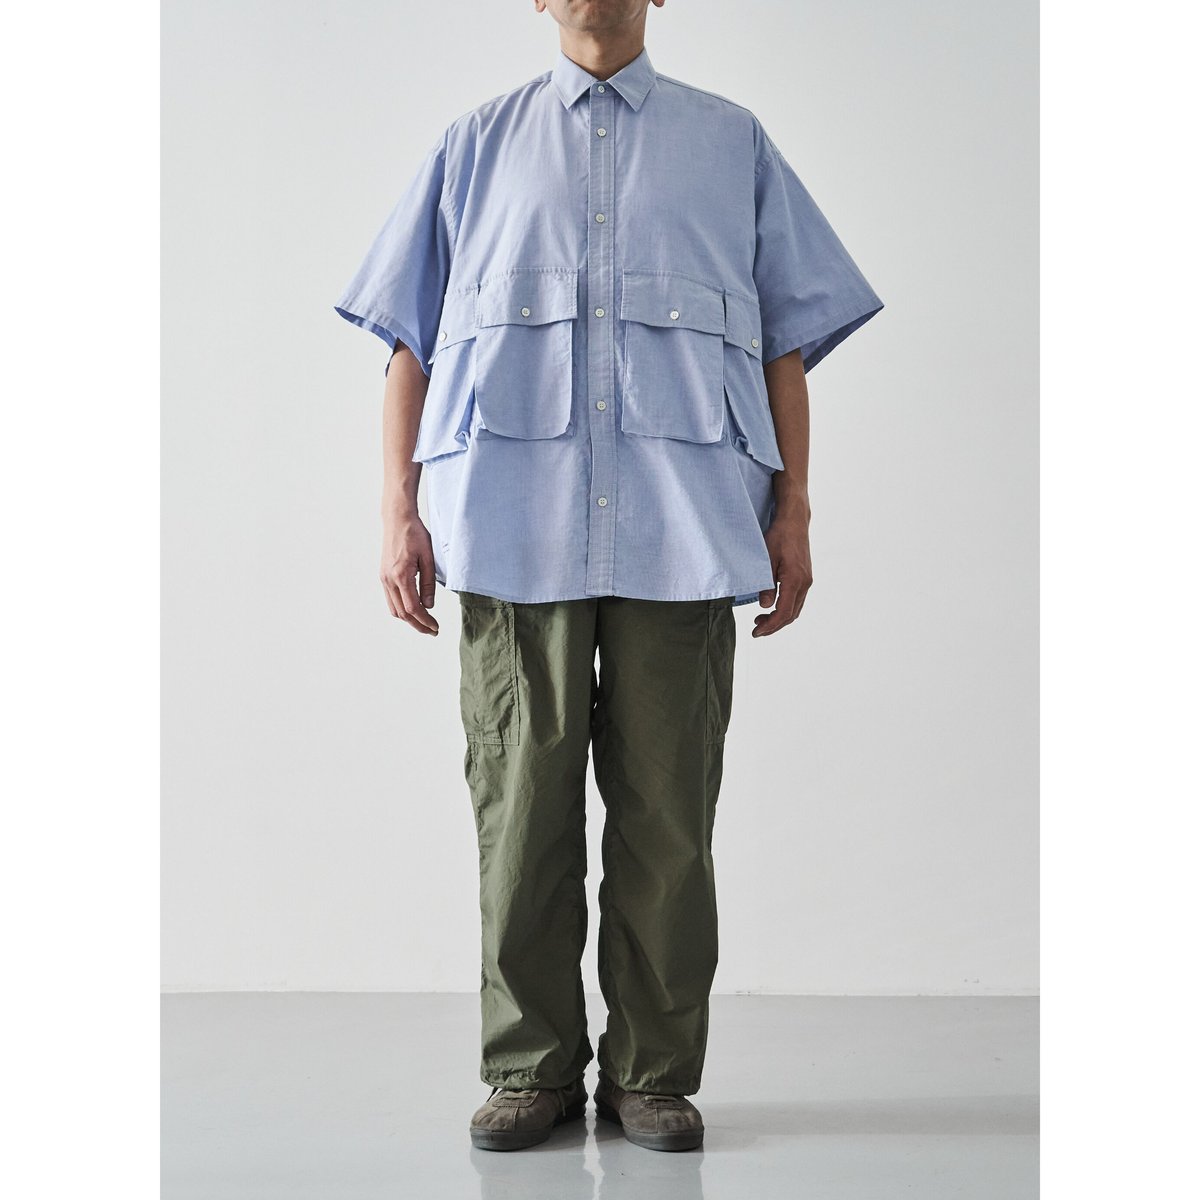 freshservice flap pocket shirts blue